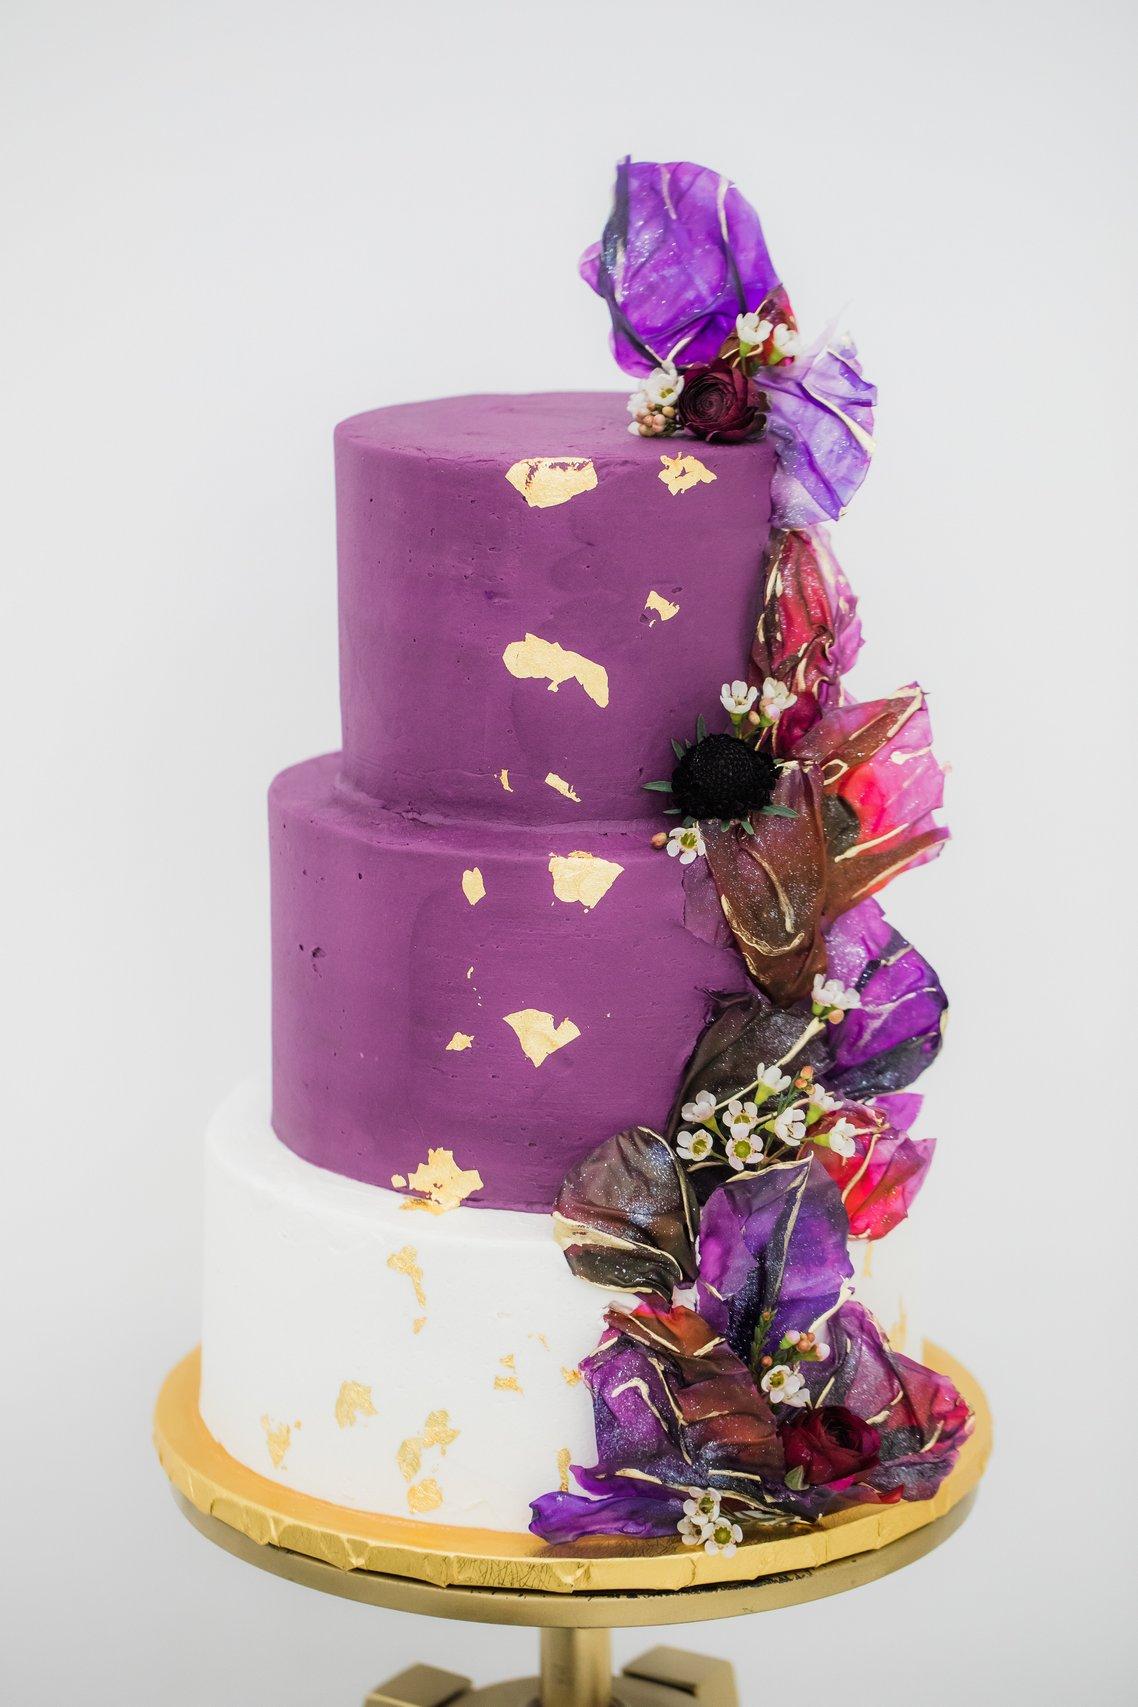 10 Stunning Wedding Cakes